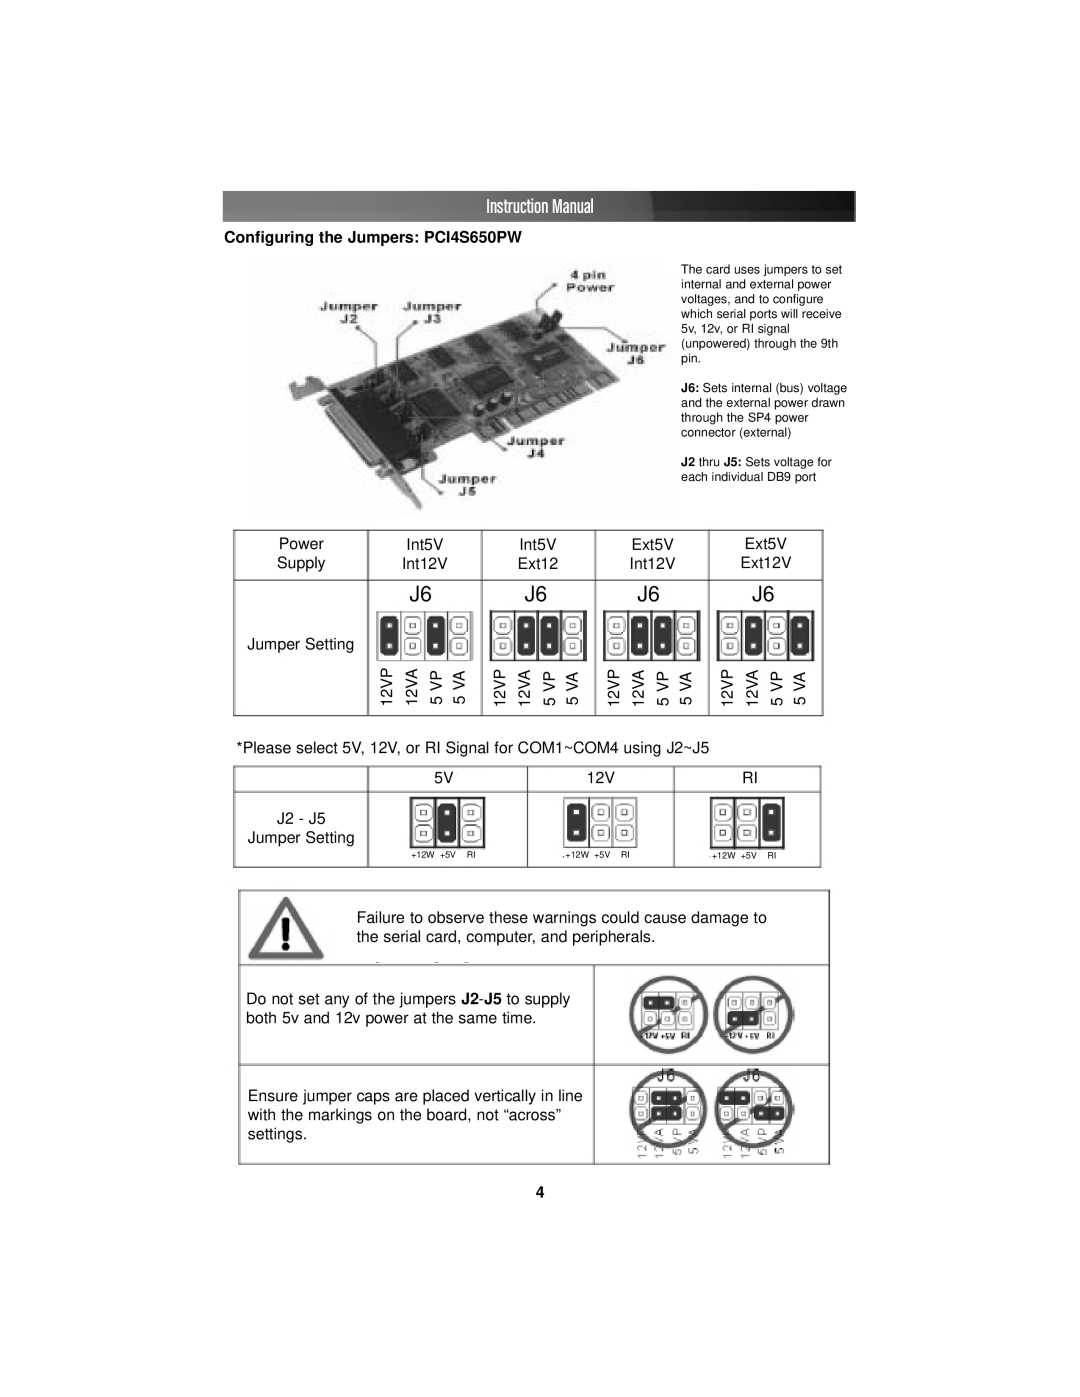 StarTech.com PCI2S650PW instruction manual Instruction Manual, Configuring the Jumpers PCI4S650PW 